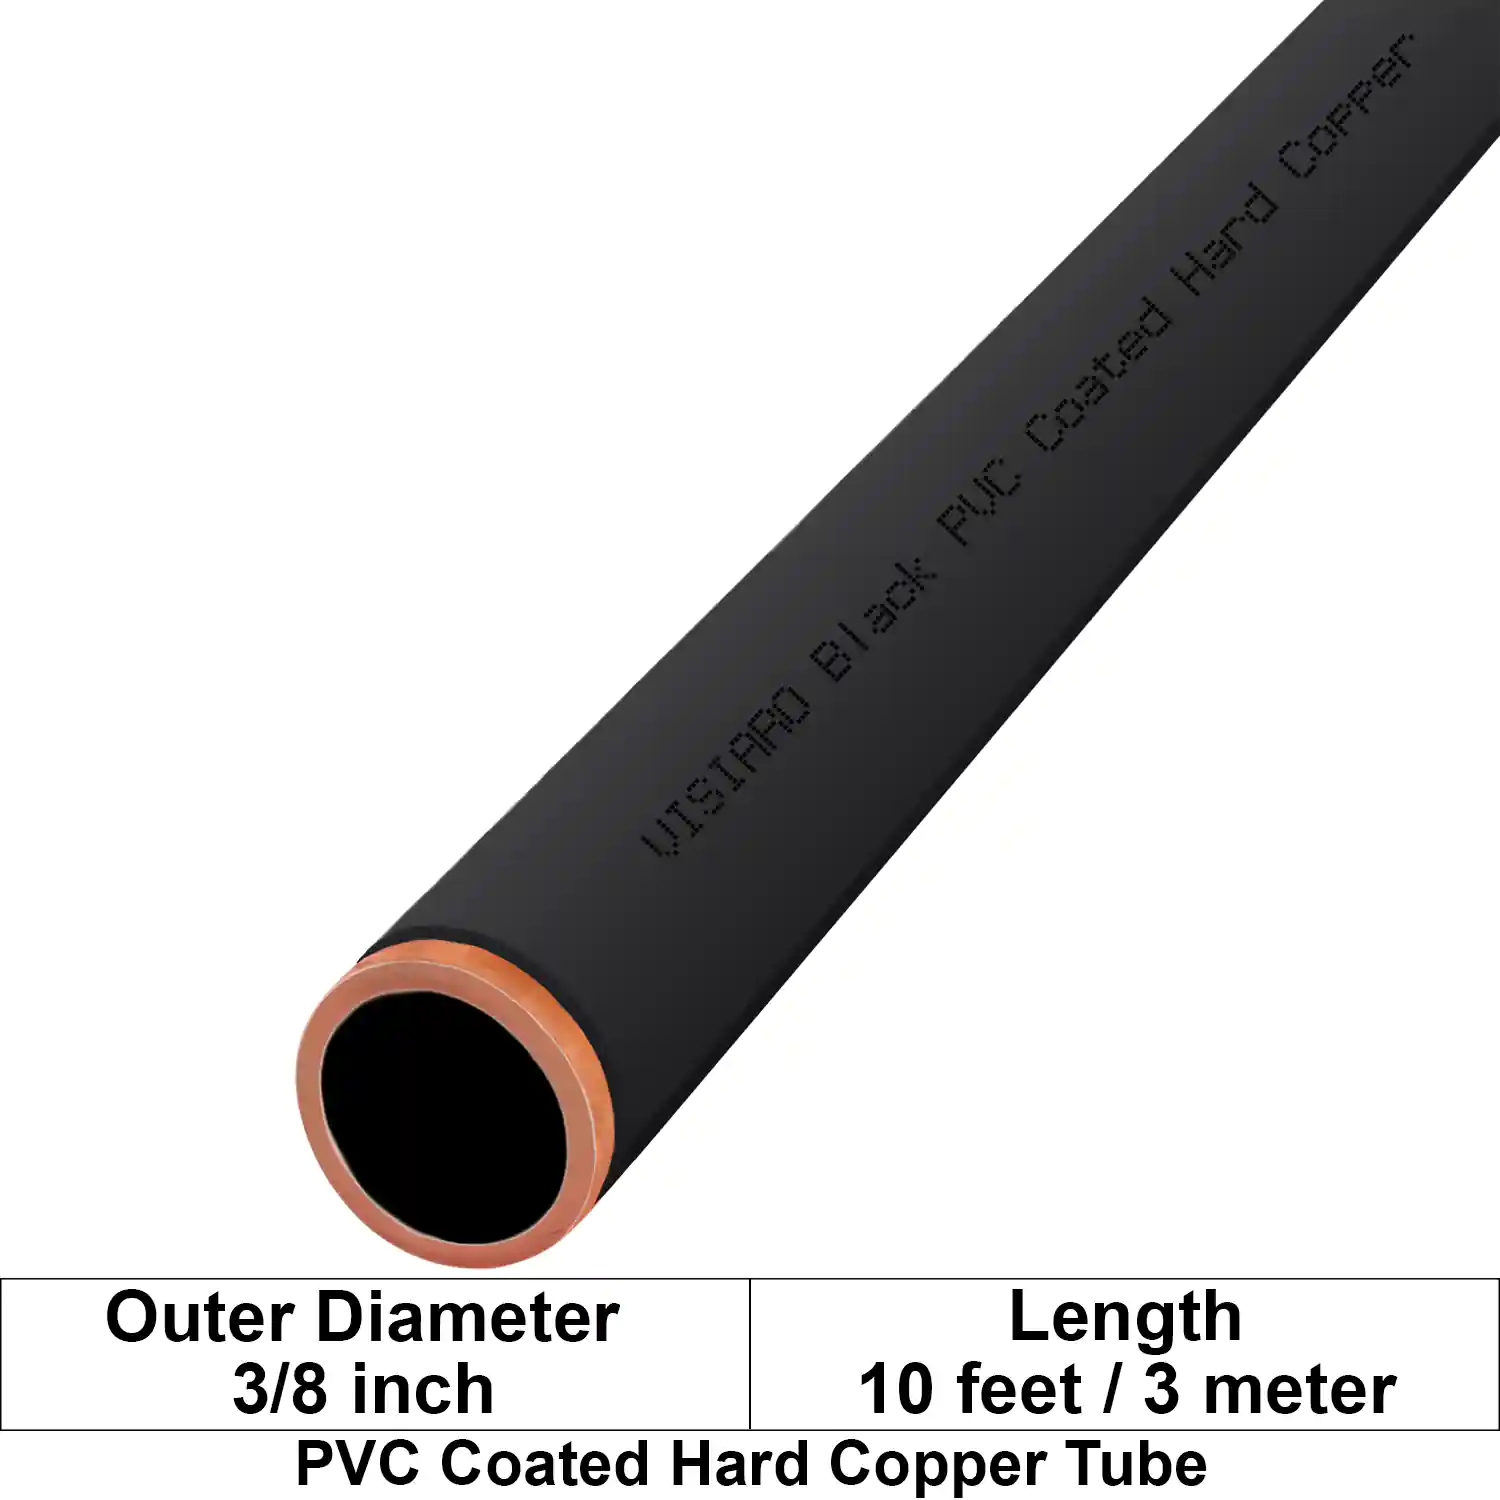 Visiaro Black PVC Coated Hard Copper Tube 10ft long Outer Diameter - 3/8 inch